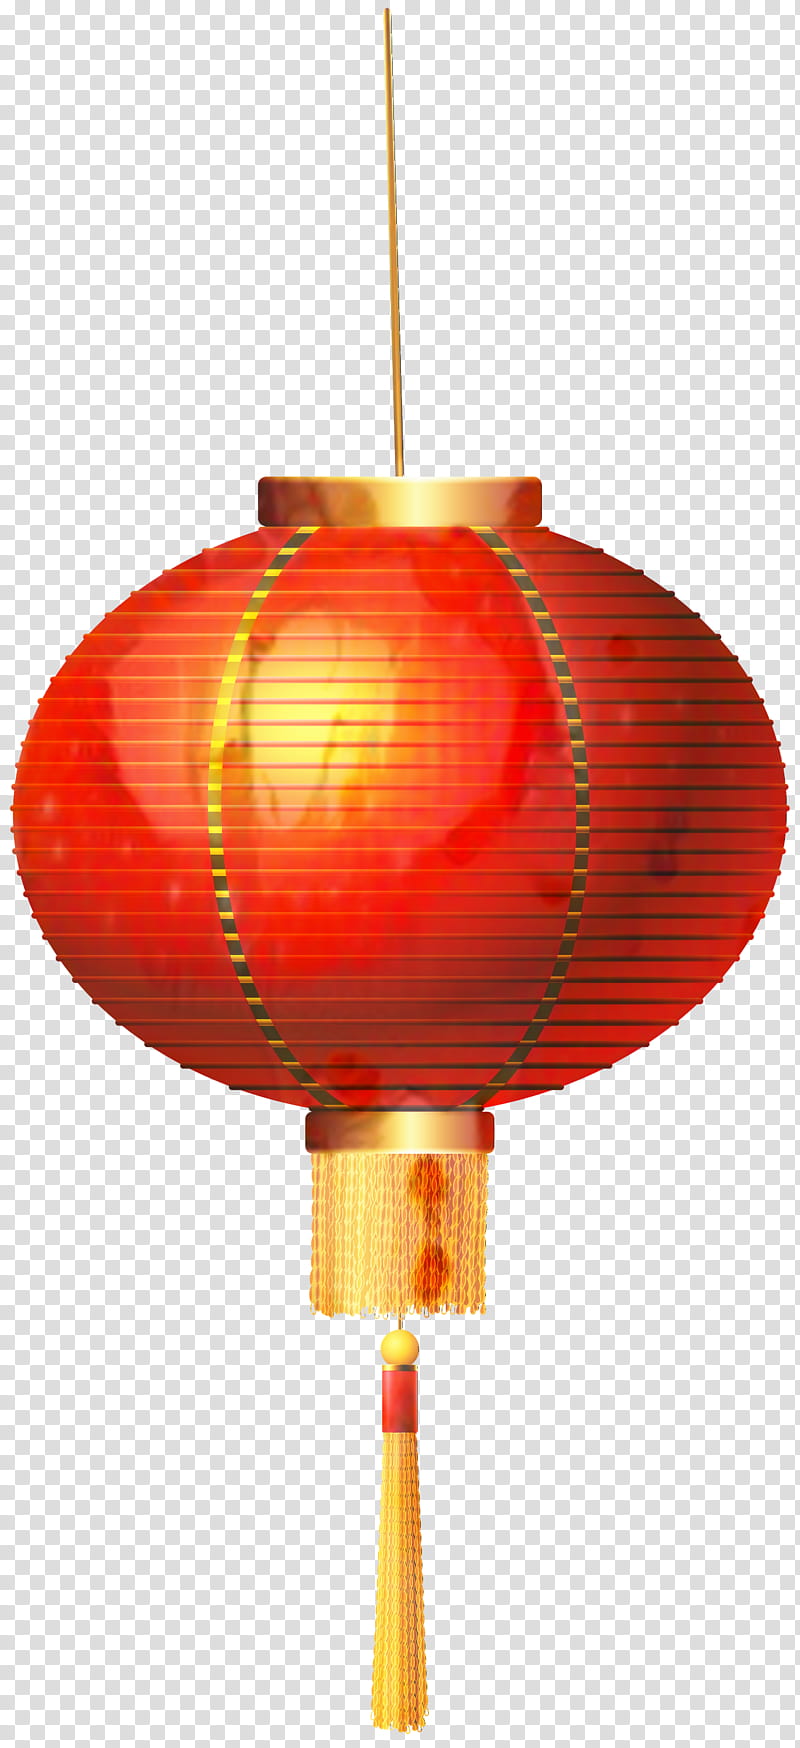 Chinese New Year Red, Lantern, Paper Lantern, Lamp, Sky Lantern, Lantern Festival, Lighting, Light Fixture transparent background PNG clipart